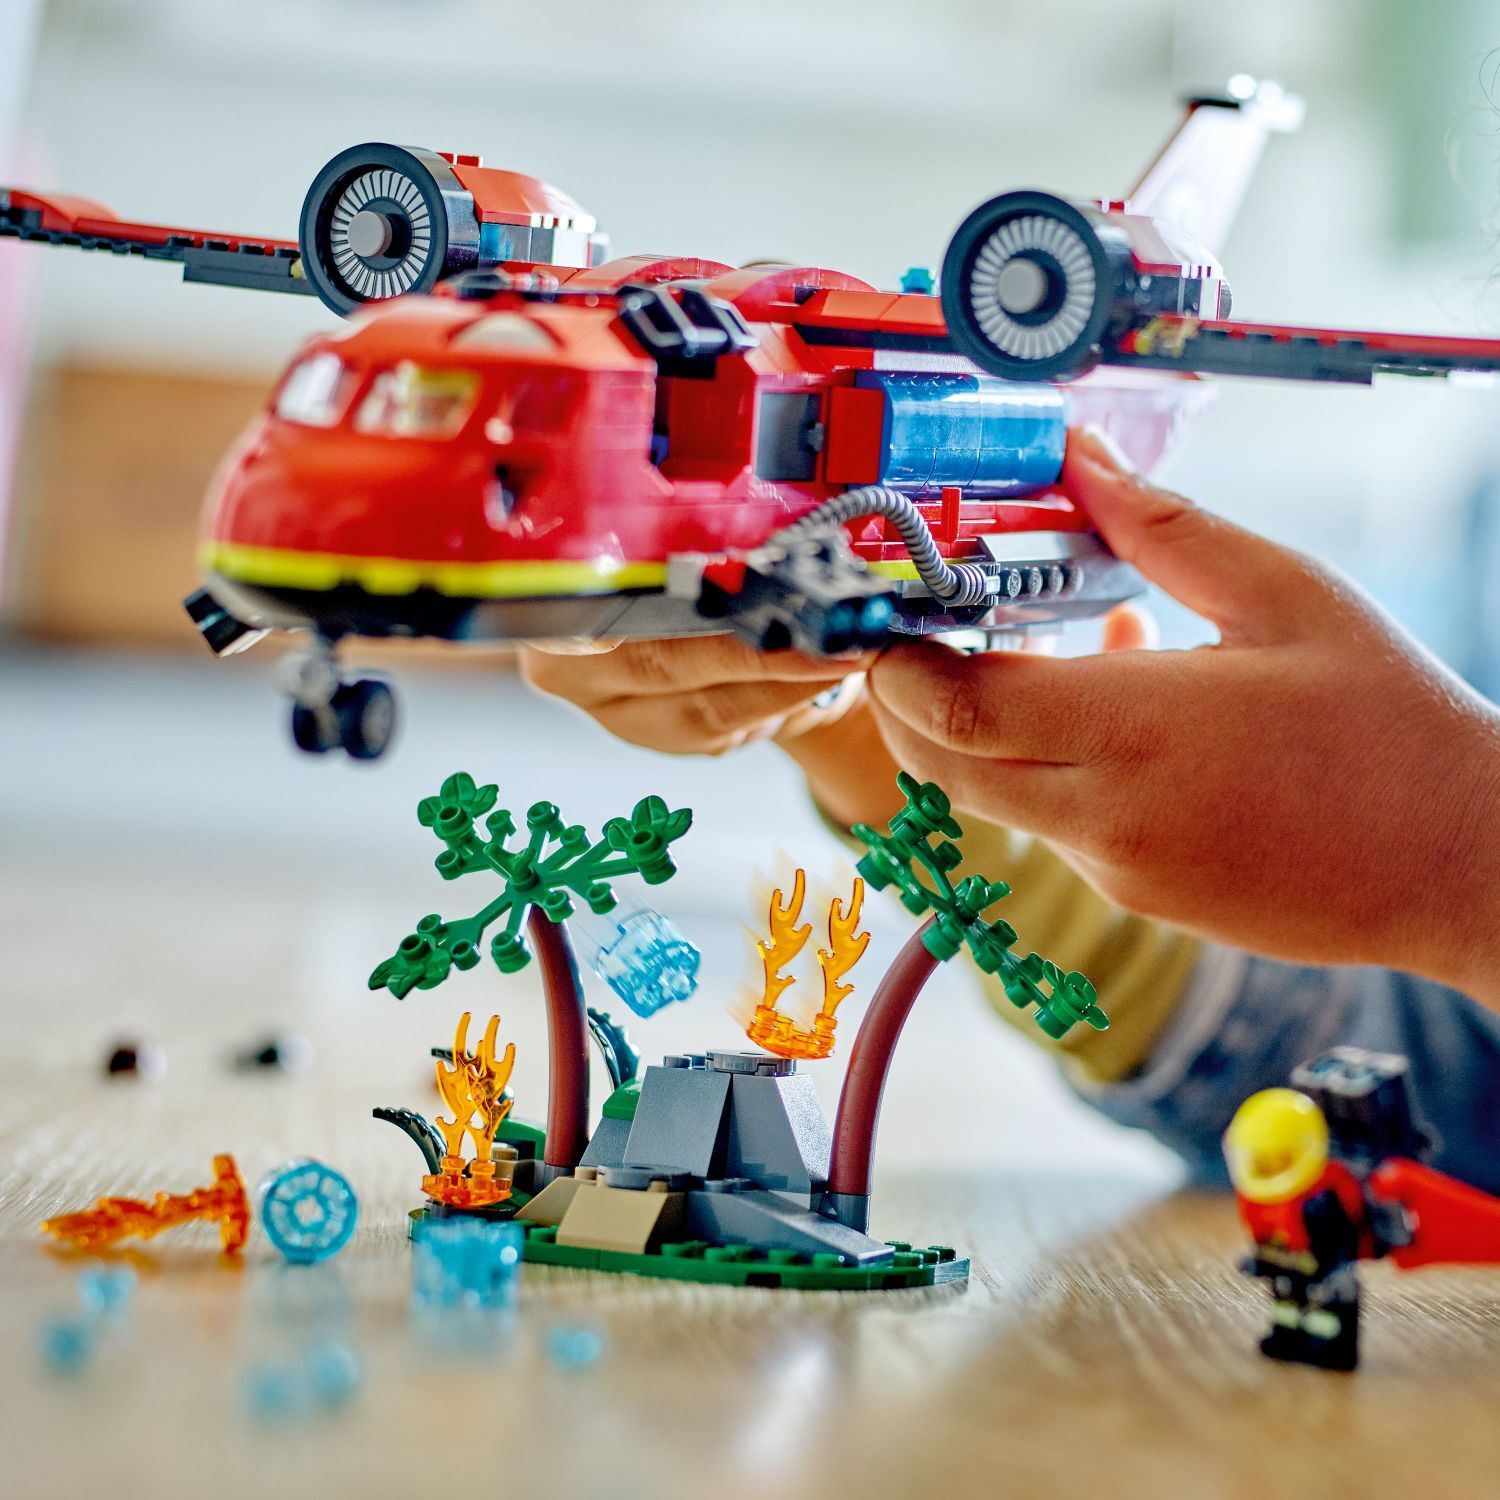 LEGO City Fire: Fire Rescue Plane